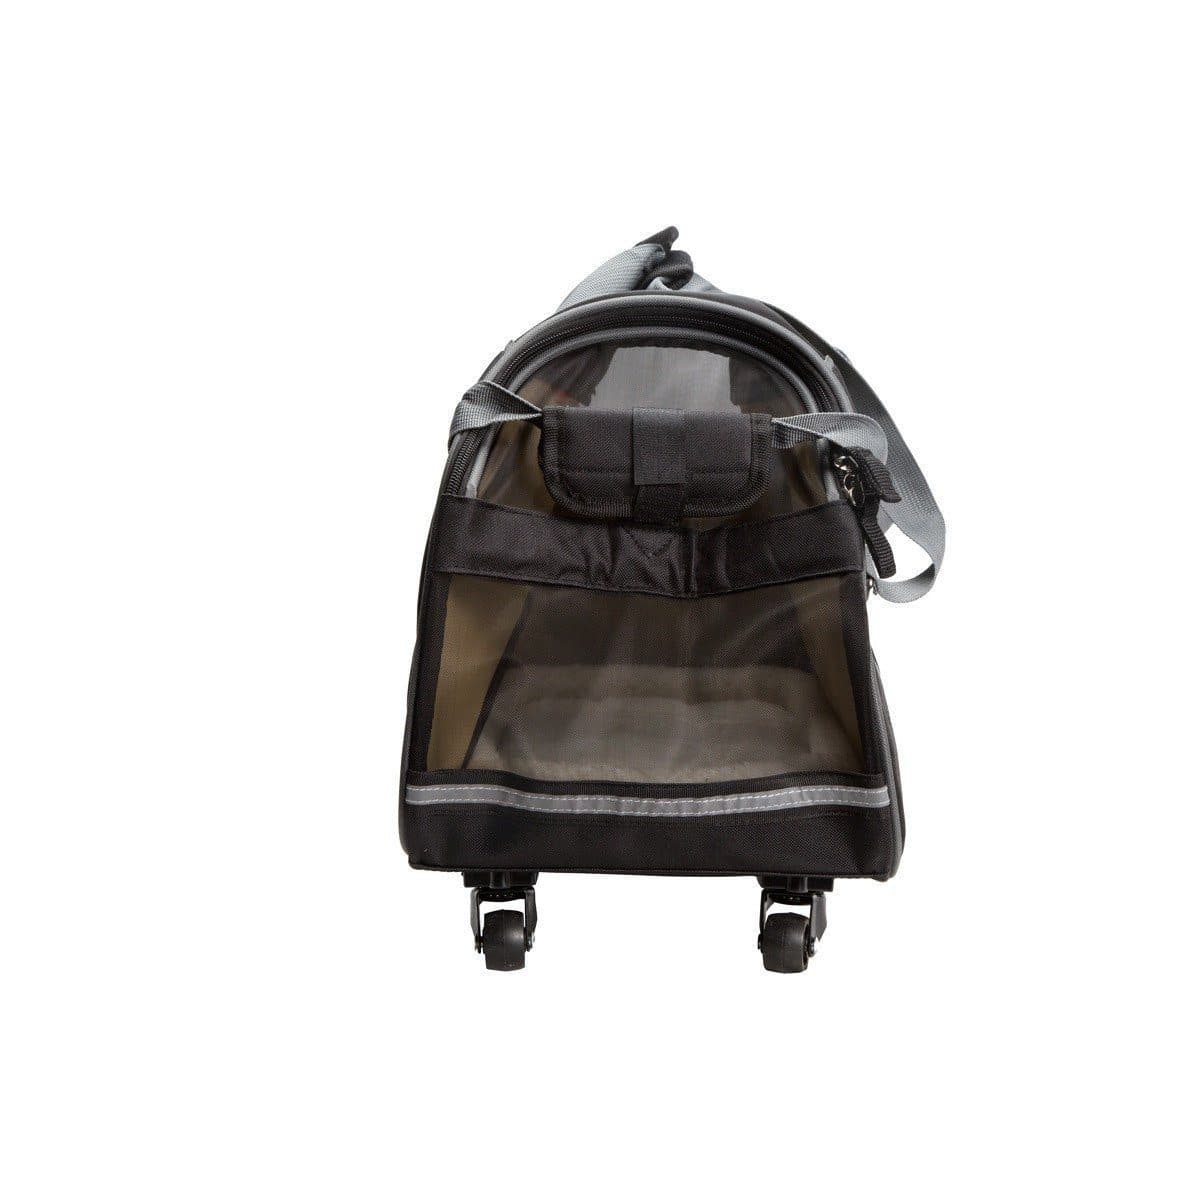 Transportadora Comfort con Ruedas - Wheeled Comfort Carrier de Bergan®